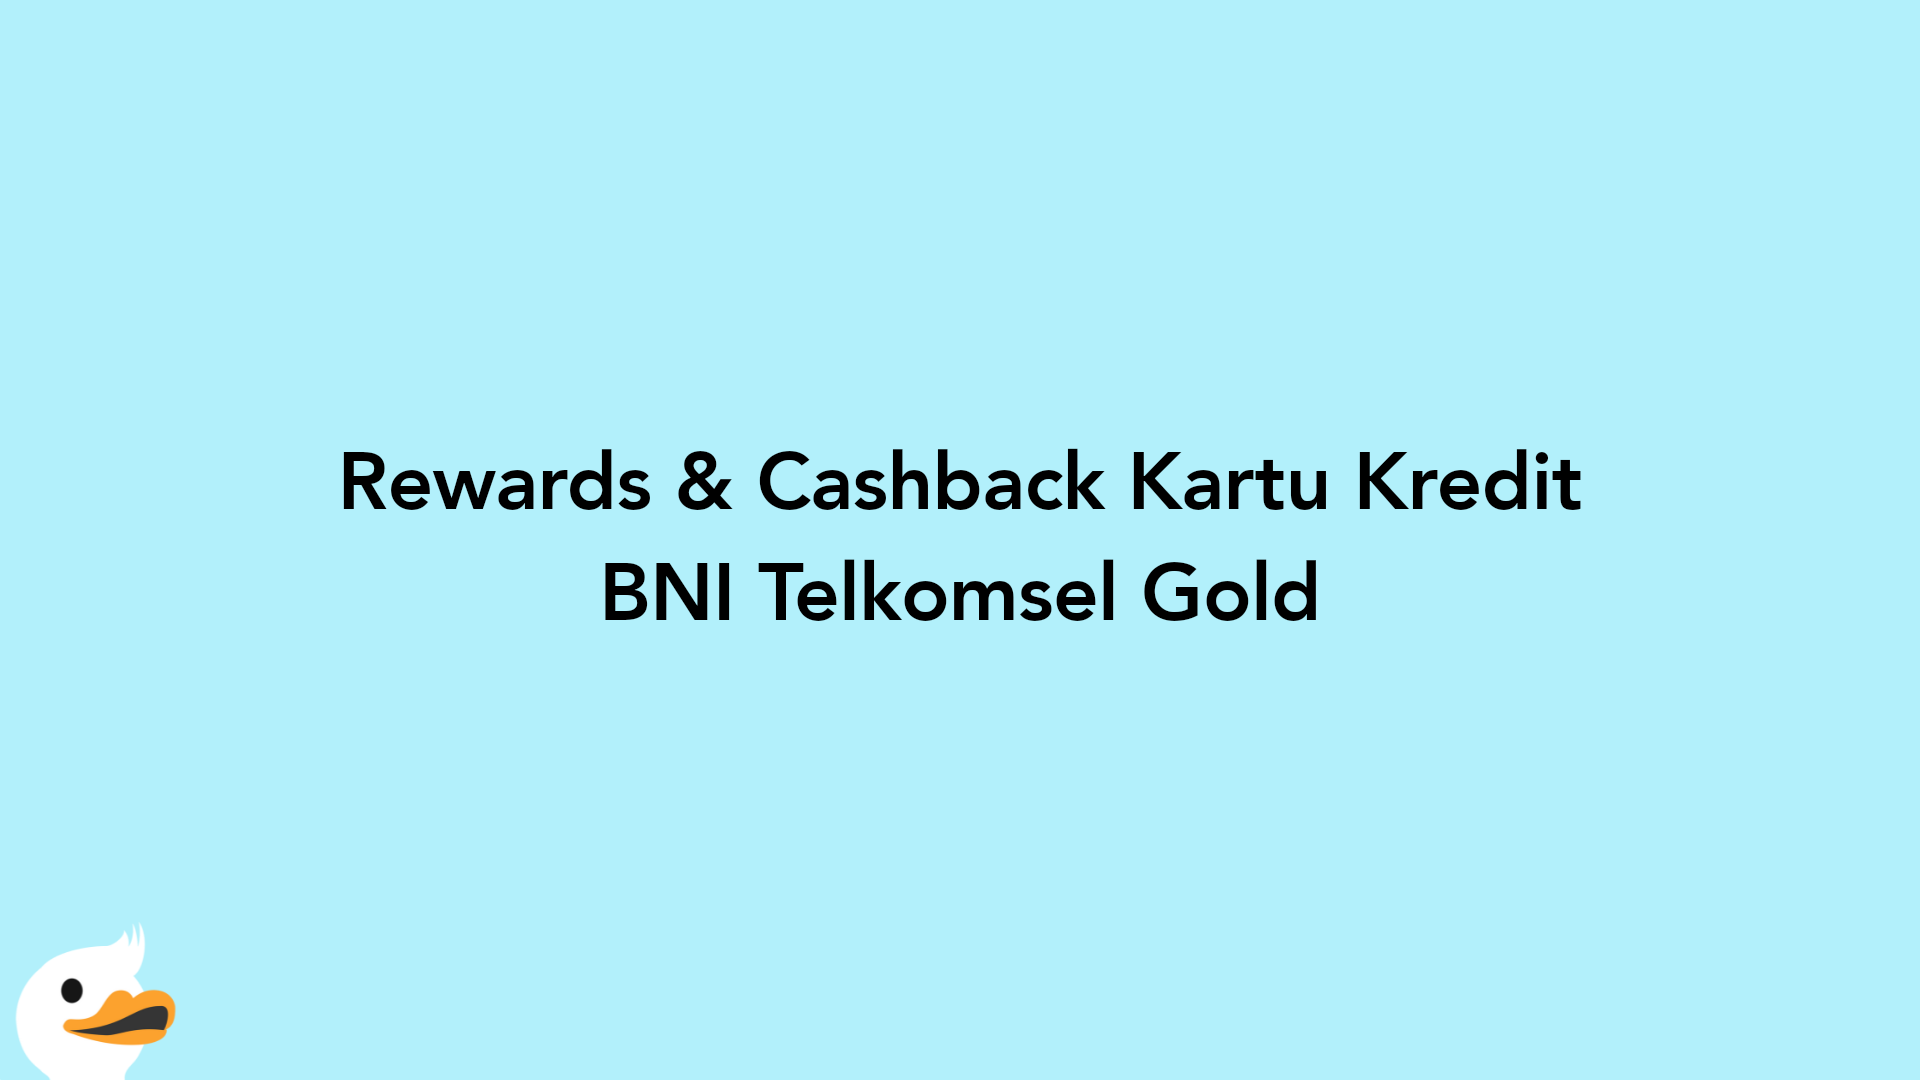 Rewards & Cashback Kartu Kredit BNI Telkomsel Gold